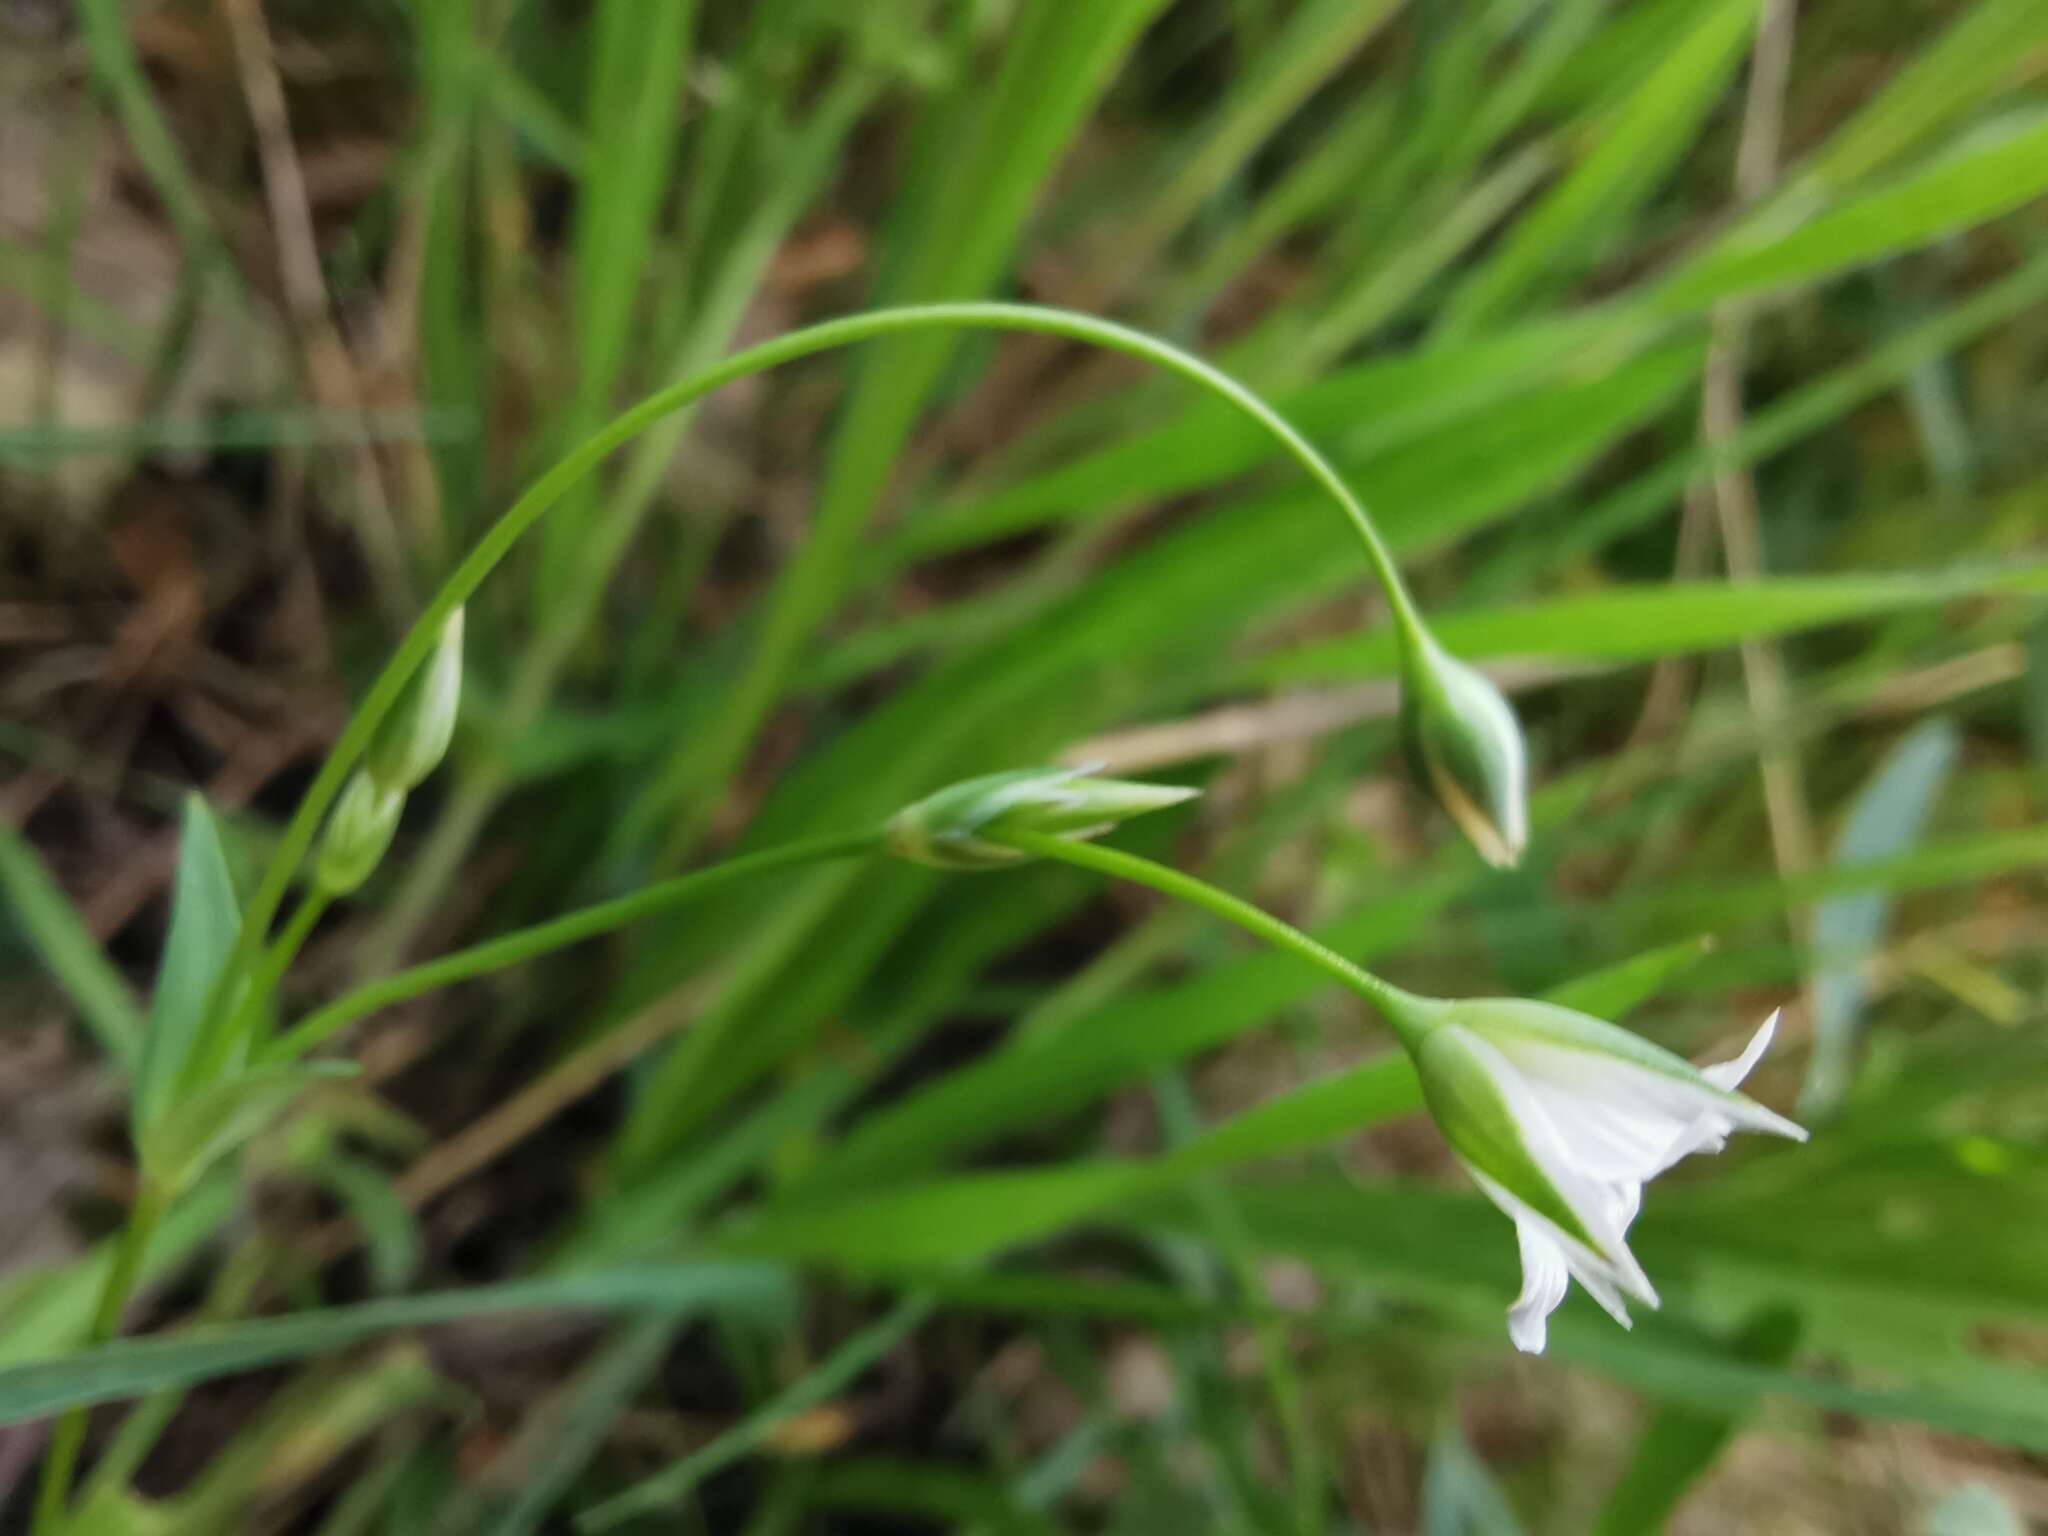 Image of Moenchia erecta subsp. octandra (Moris) Coutinho